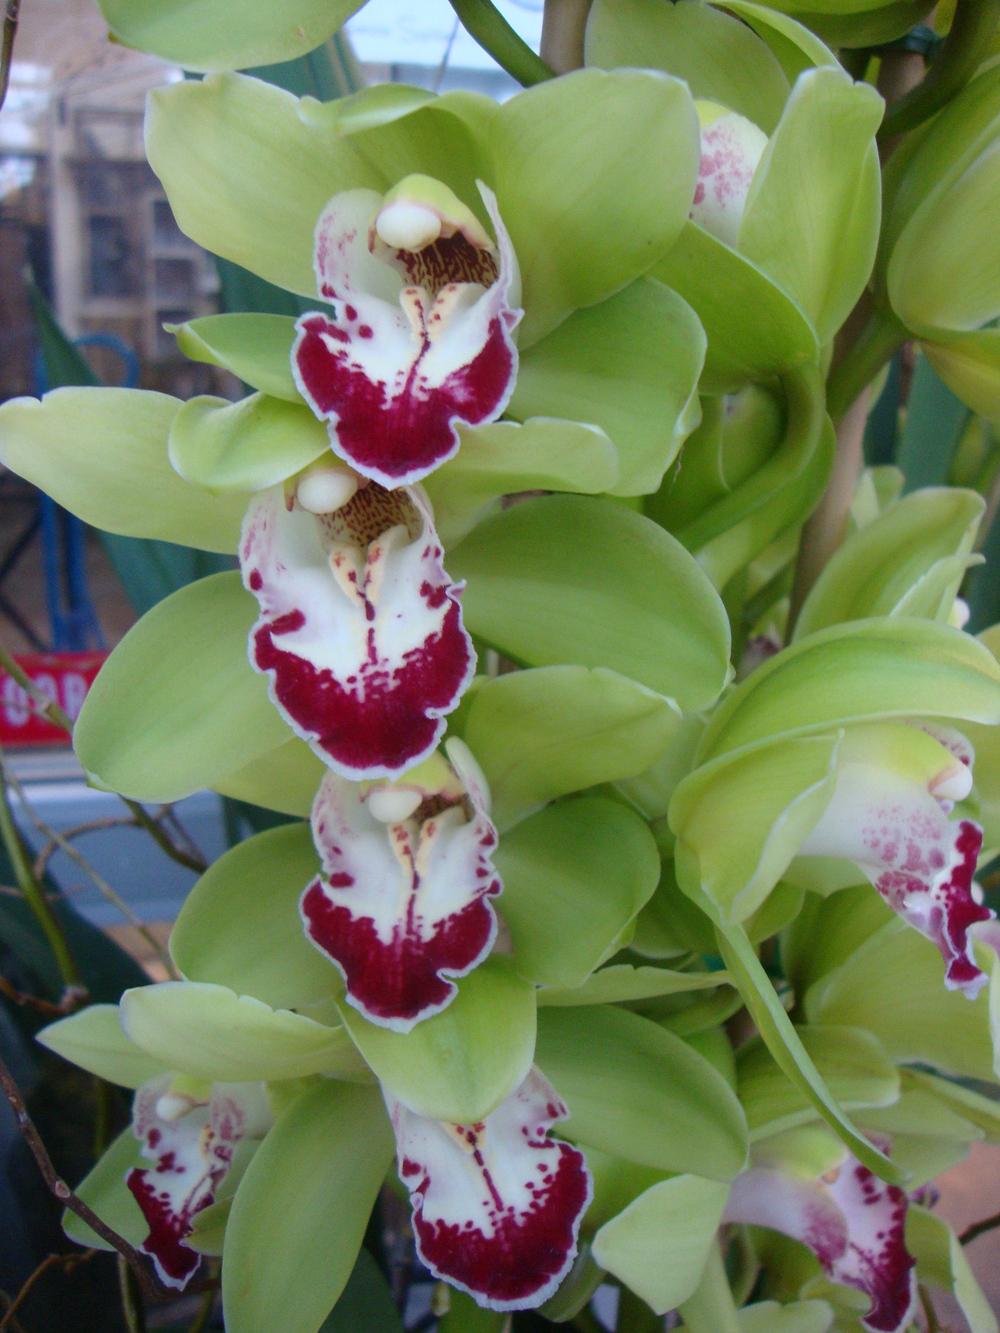 Photo of Orchid (Cymbidium) uploaded by Paul2032